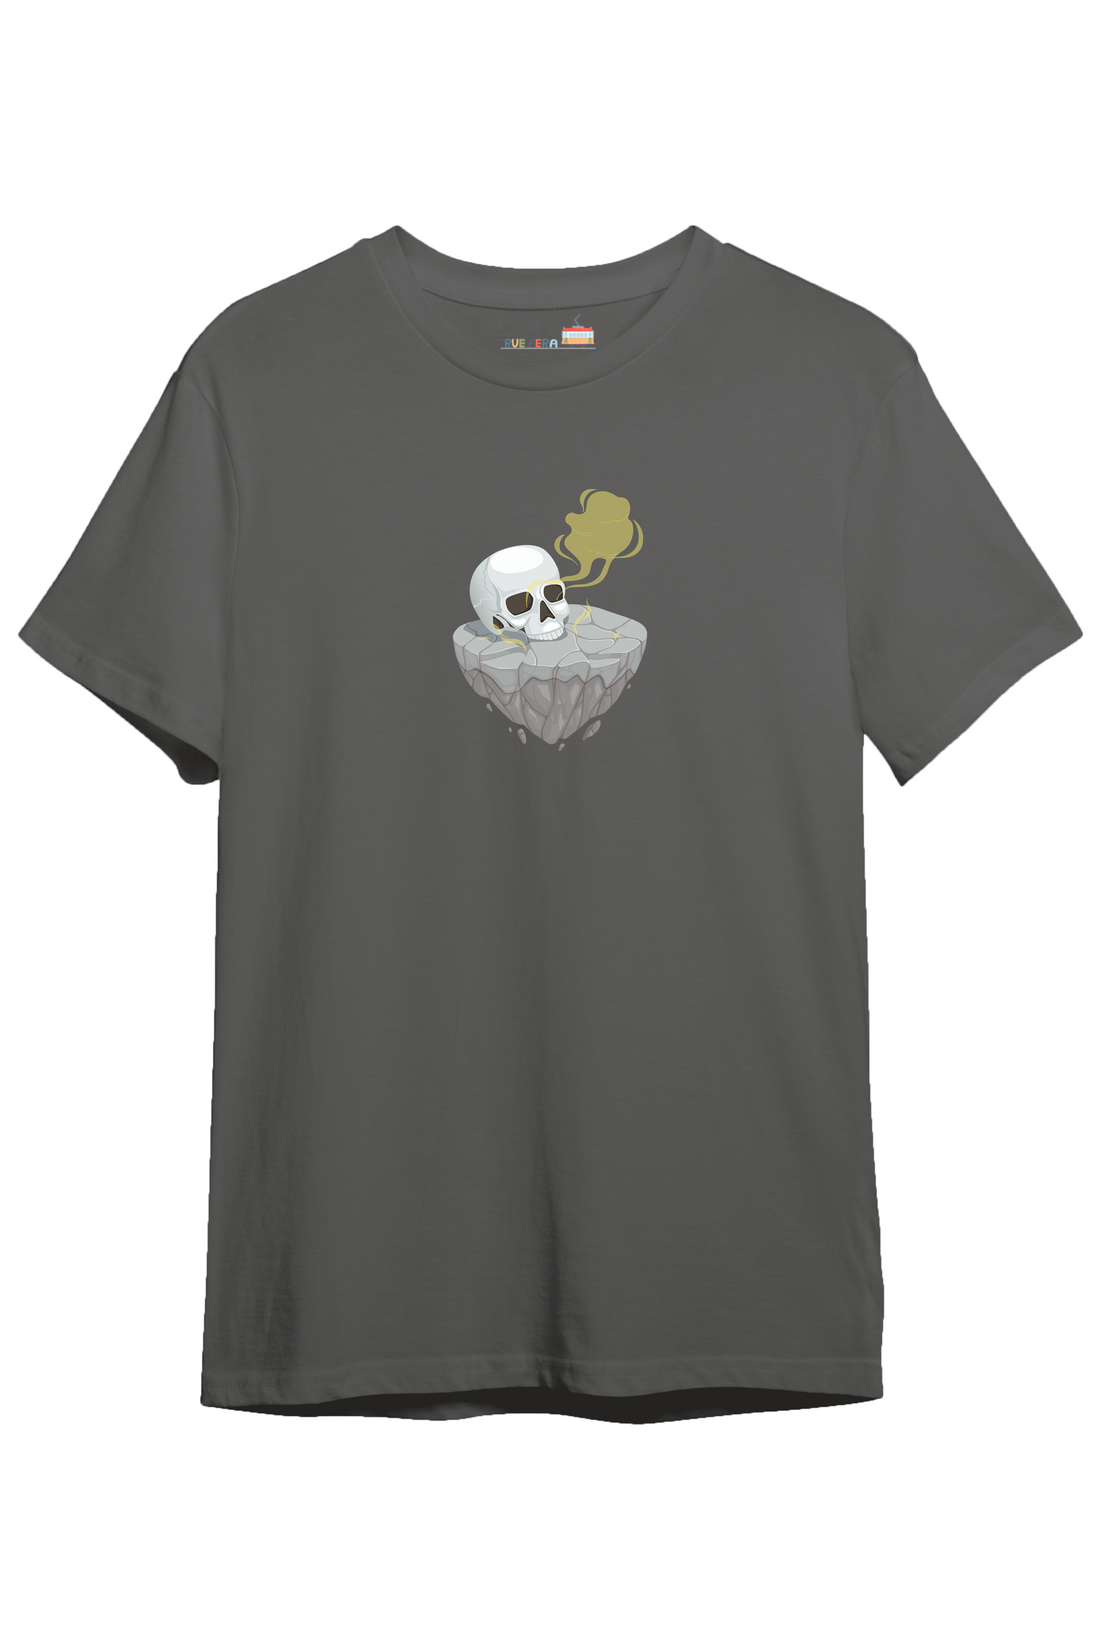 Skull Island - Oversize Tshirt